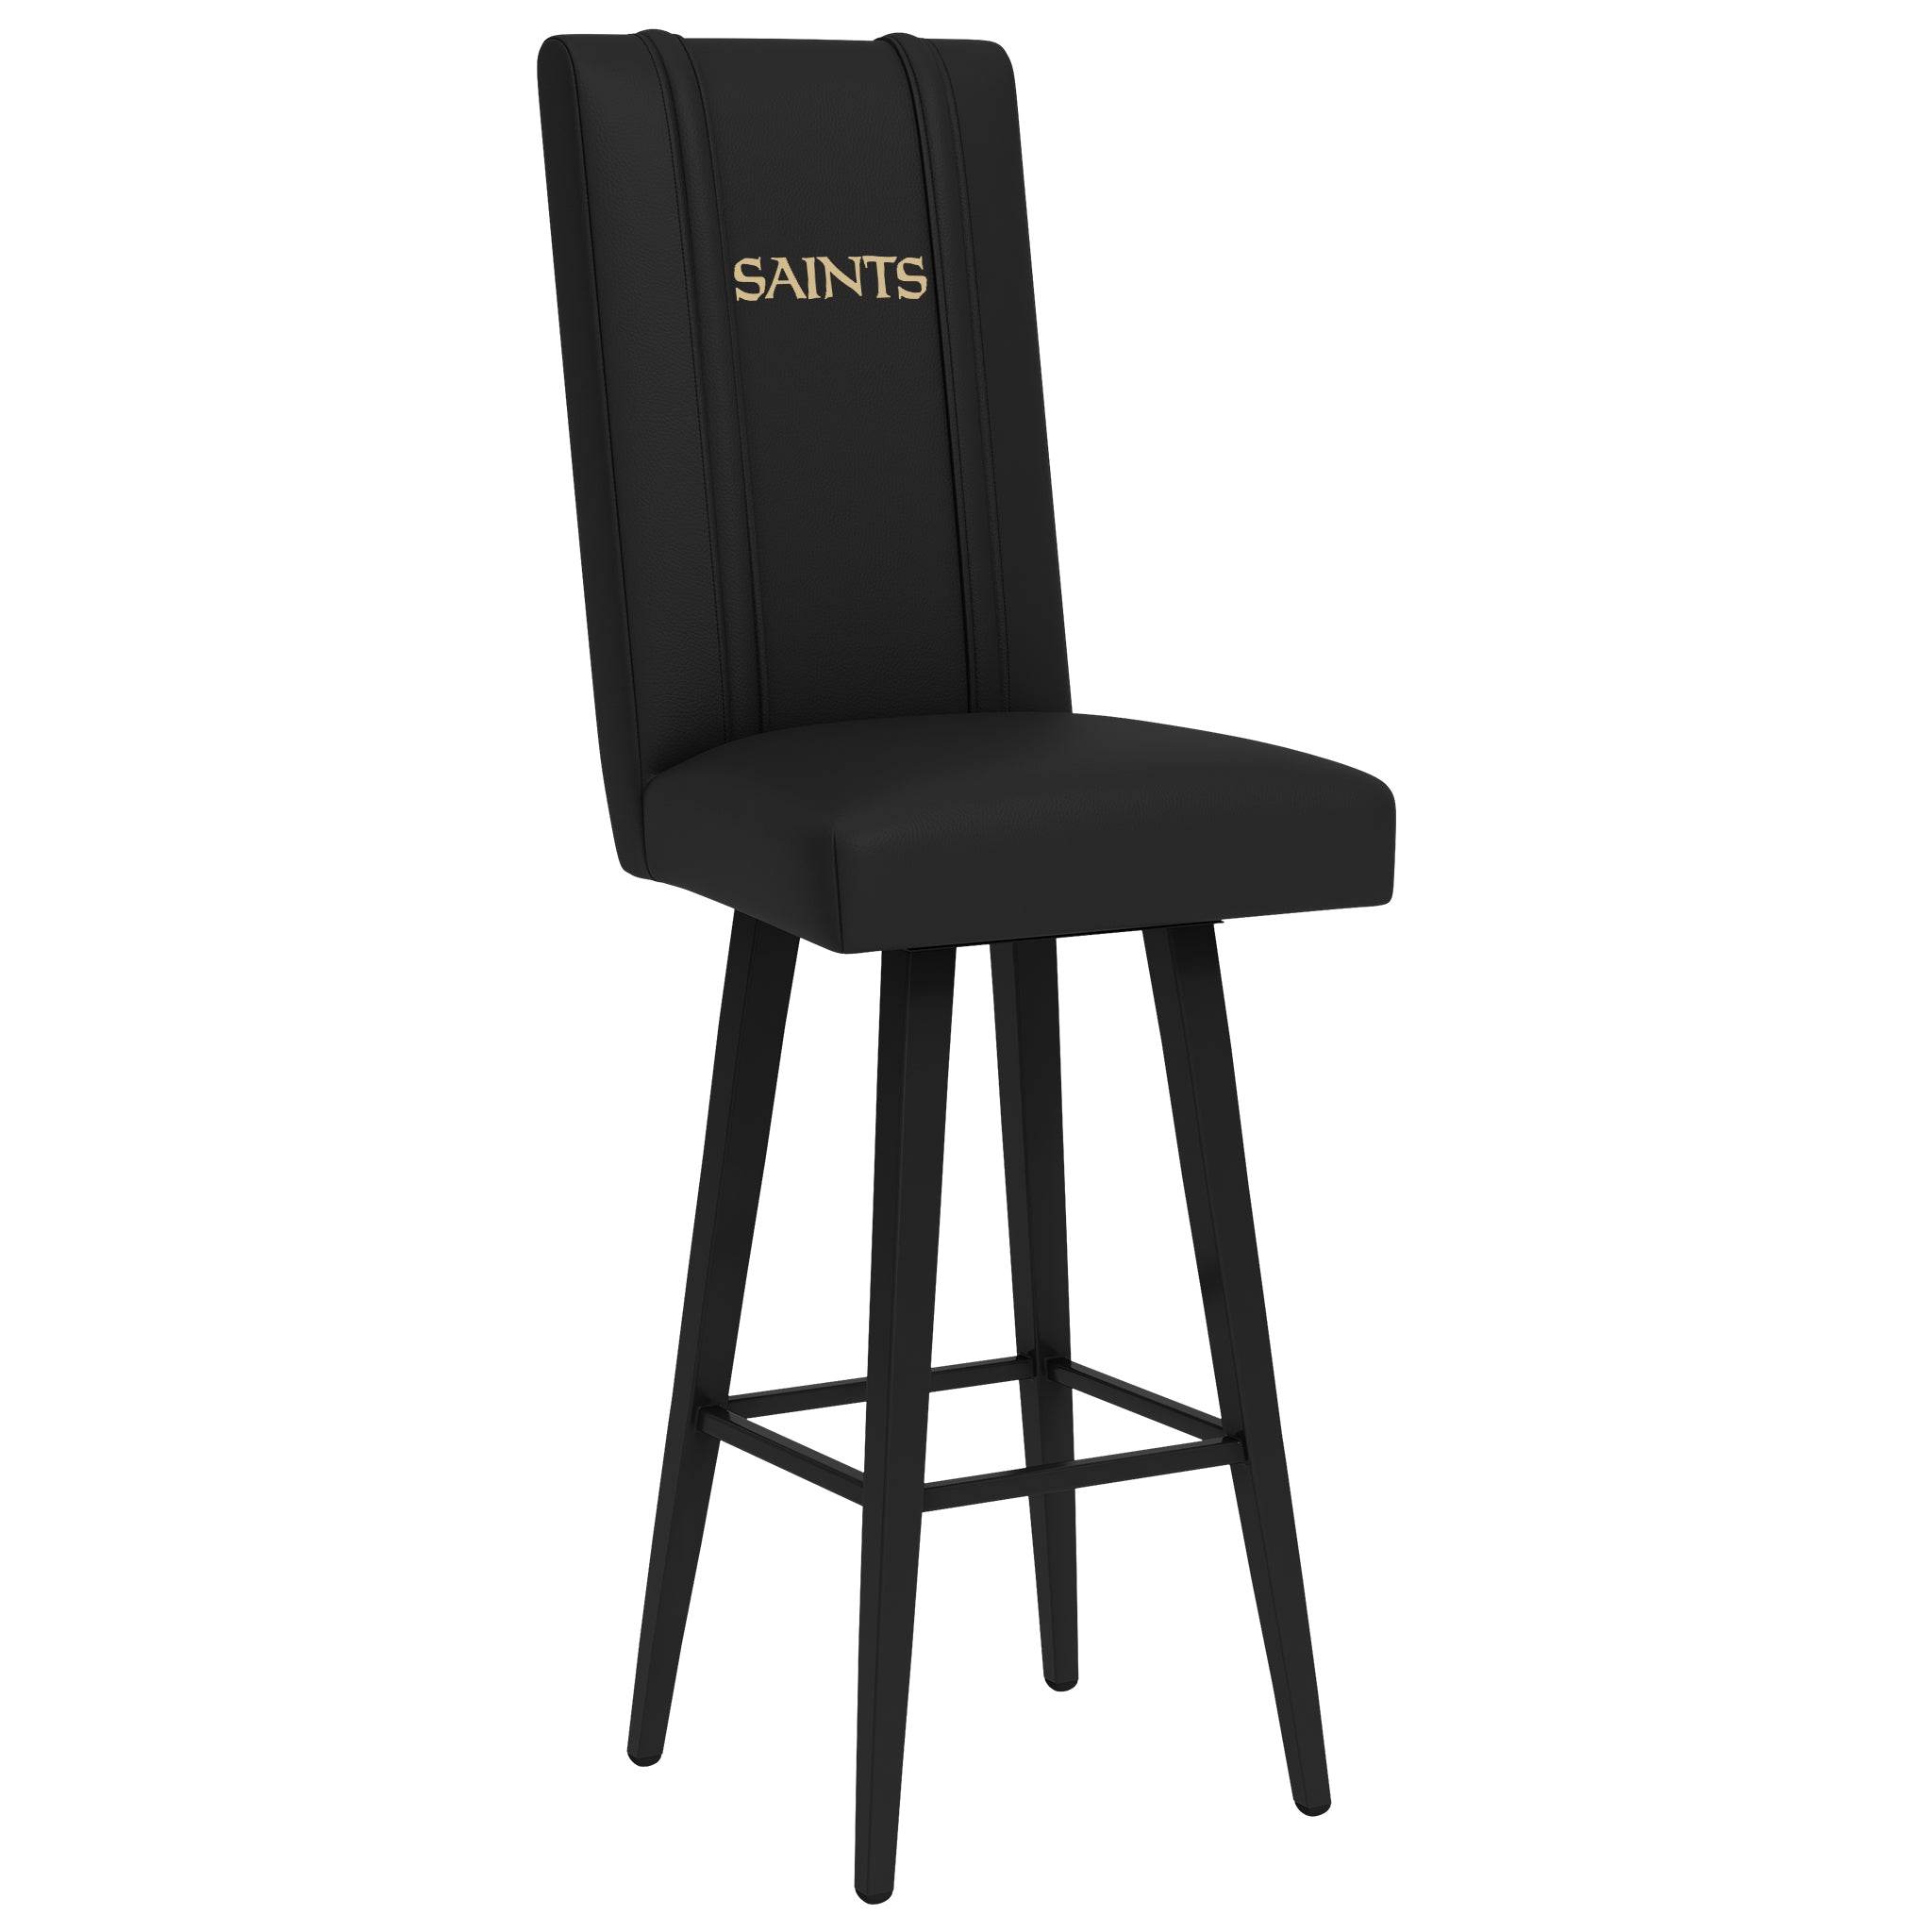 New Orleans Saints Swivel Bar Stool - Chair - Furniture - Kitchen